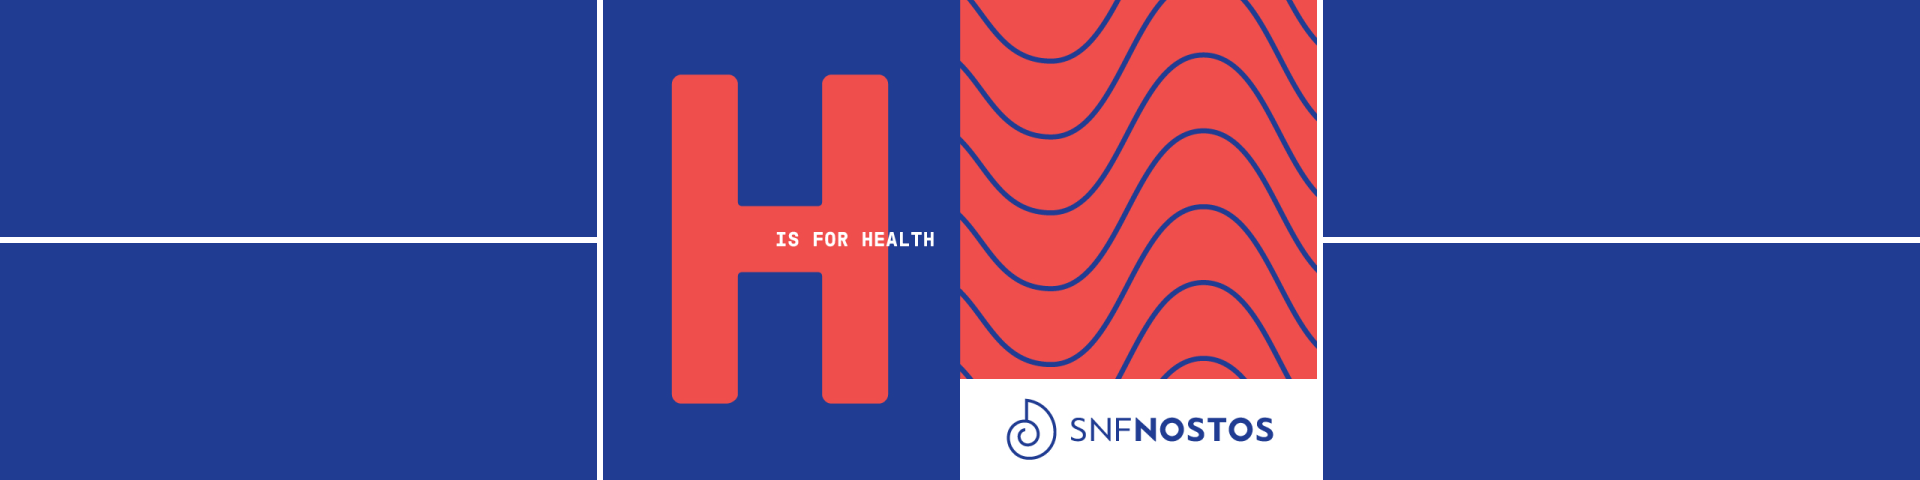 SNF Nostos Health 23 & 24 Ιουνίου 2022 - Εικόνα